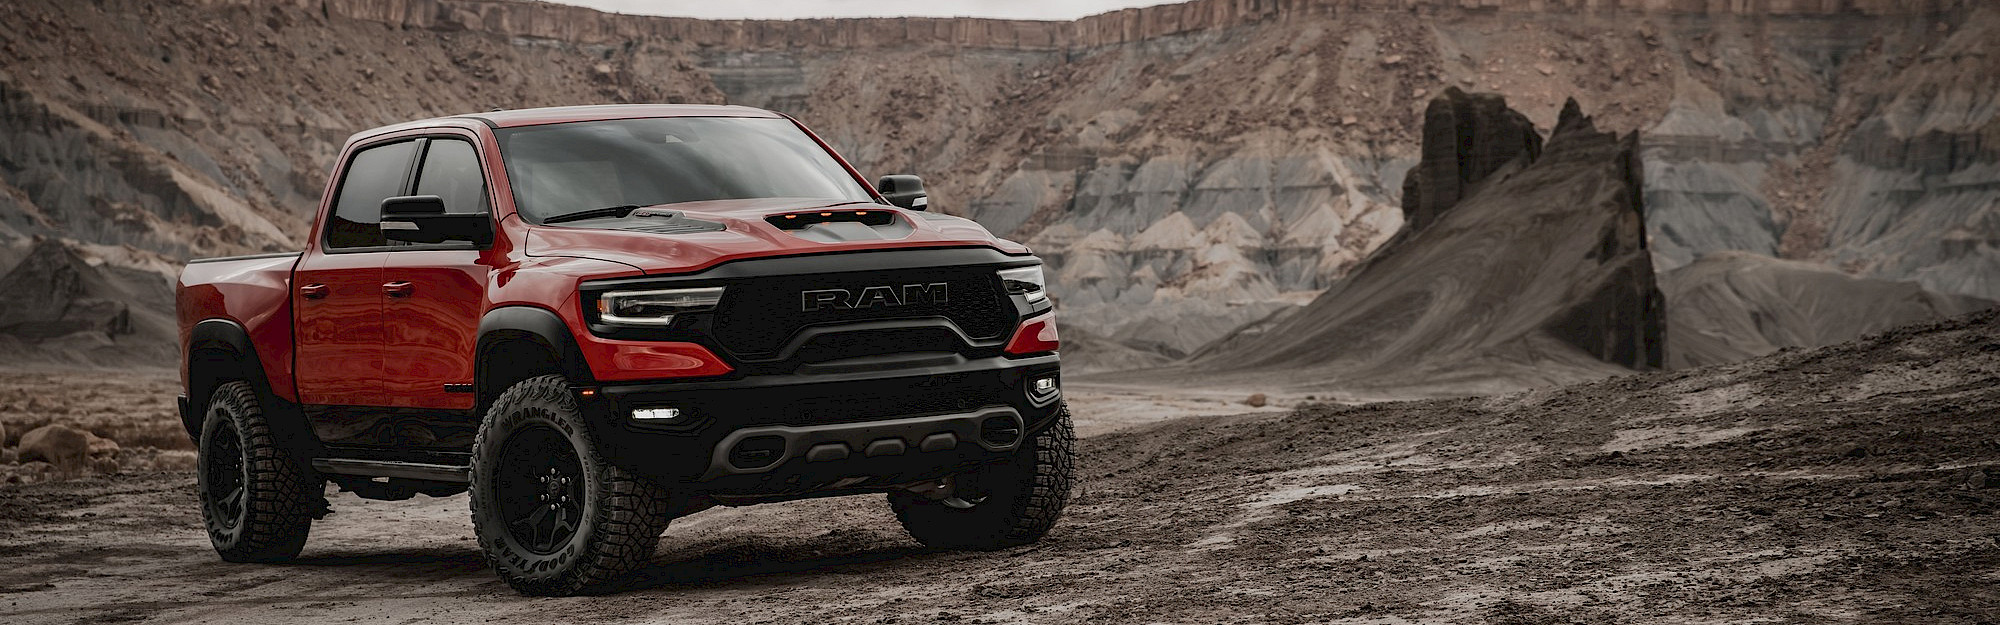 RAM TRX modell áll a sivatagban